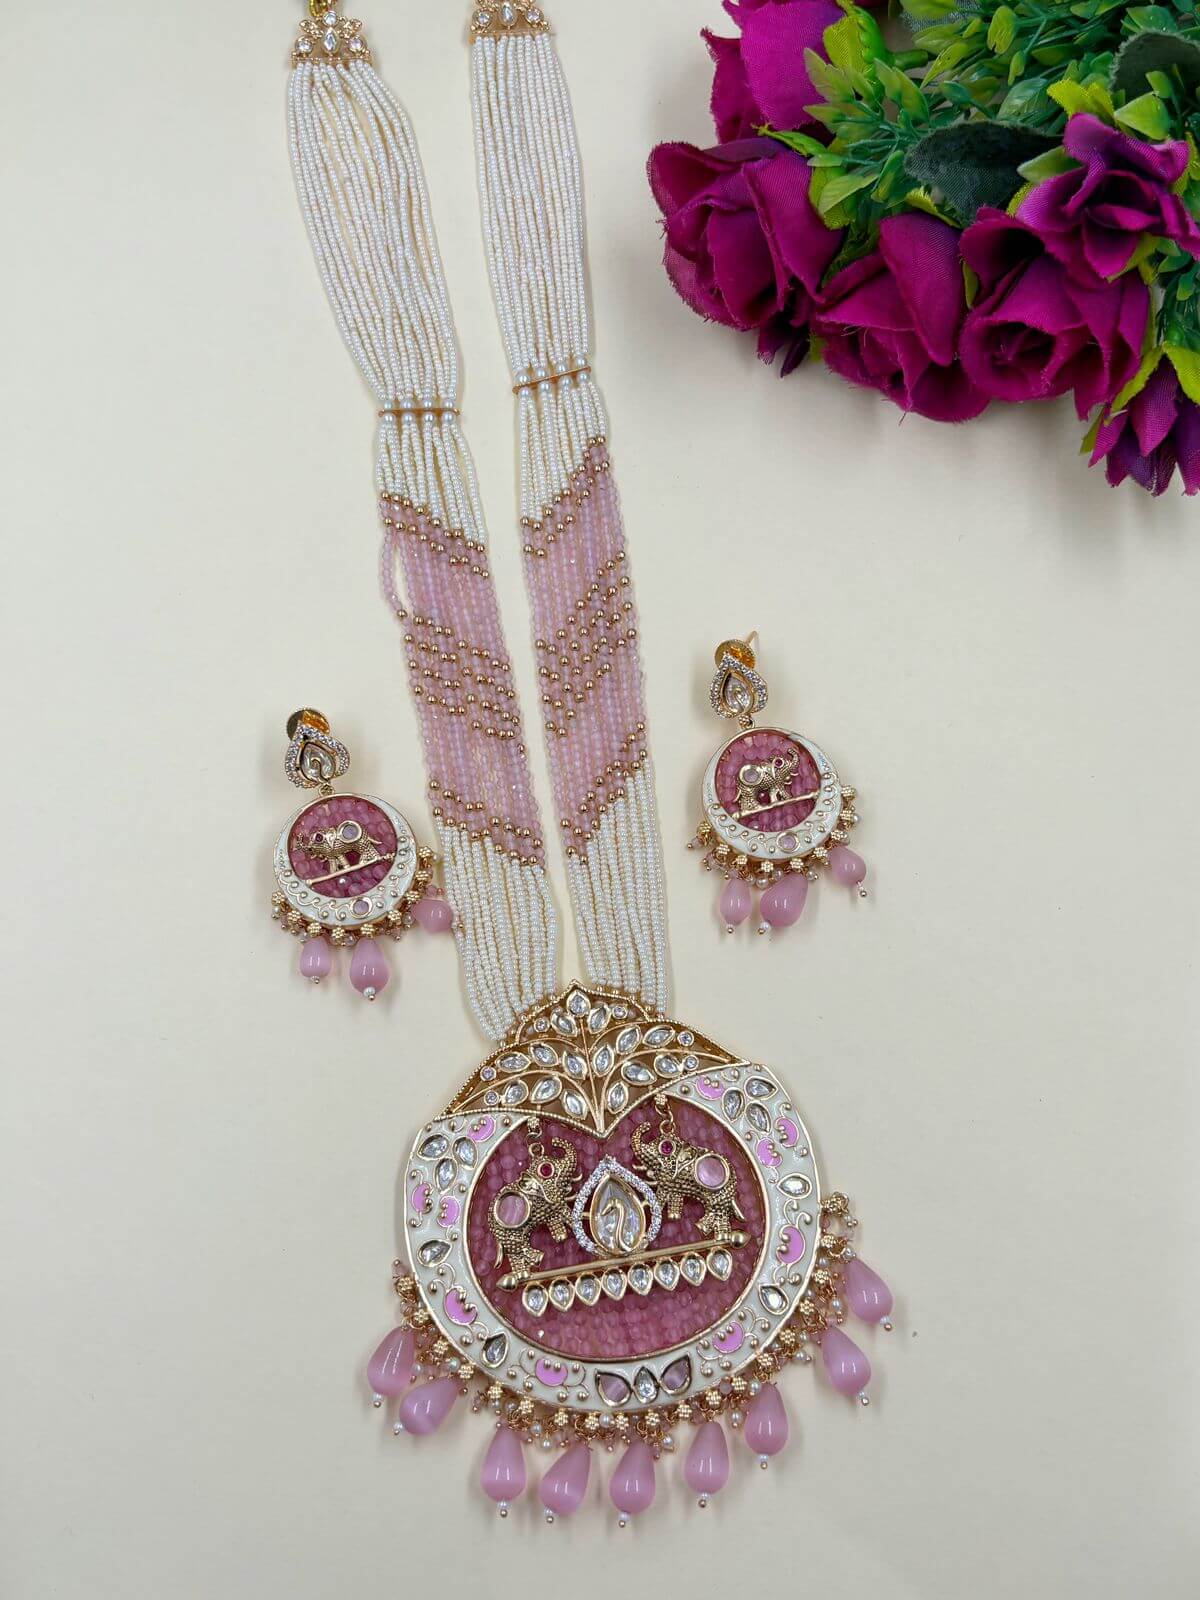 Shivanjali Long Polki Studded Elephant Design Temple Jewellery Necklace Set with baby pink beads